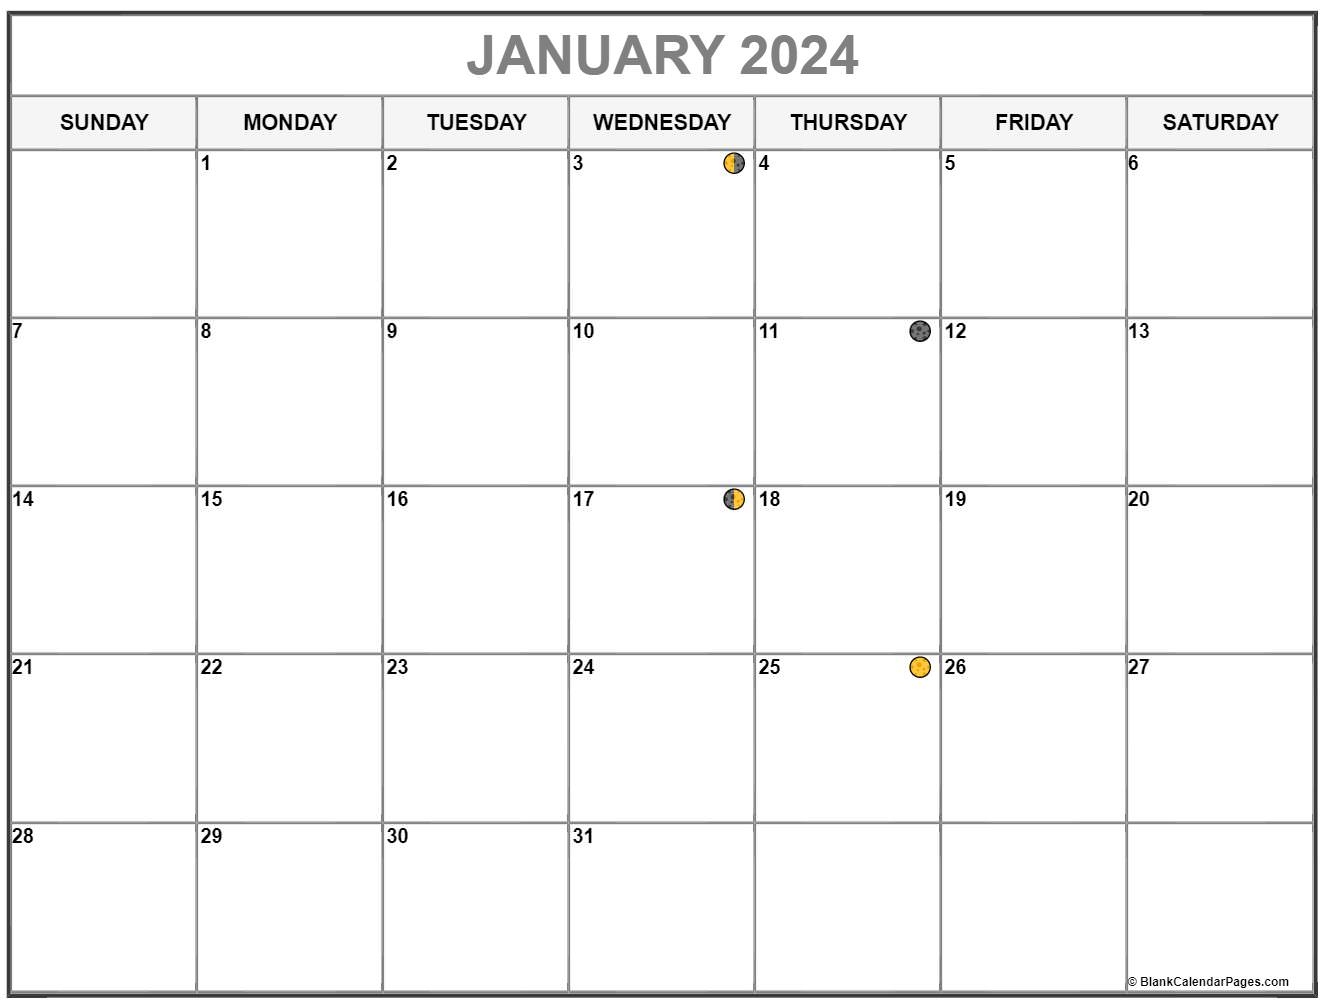 Calendar Jan 2024 Calendar Printable Easy To Use Calendar App 2024 - Free Printable 2024 Lunar Calendar